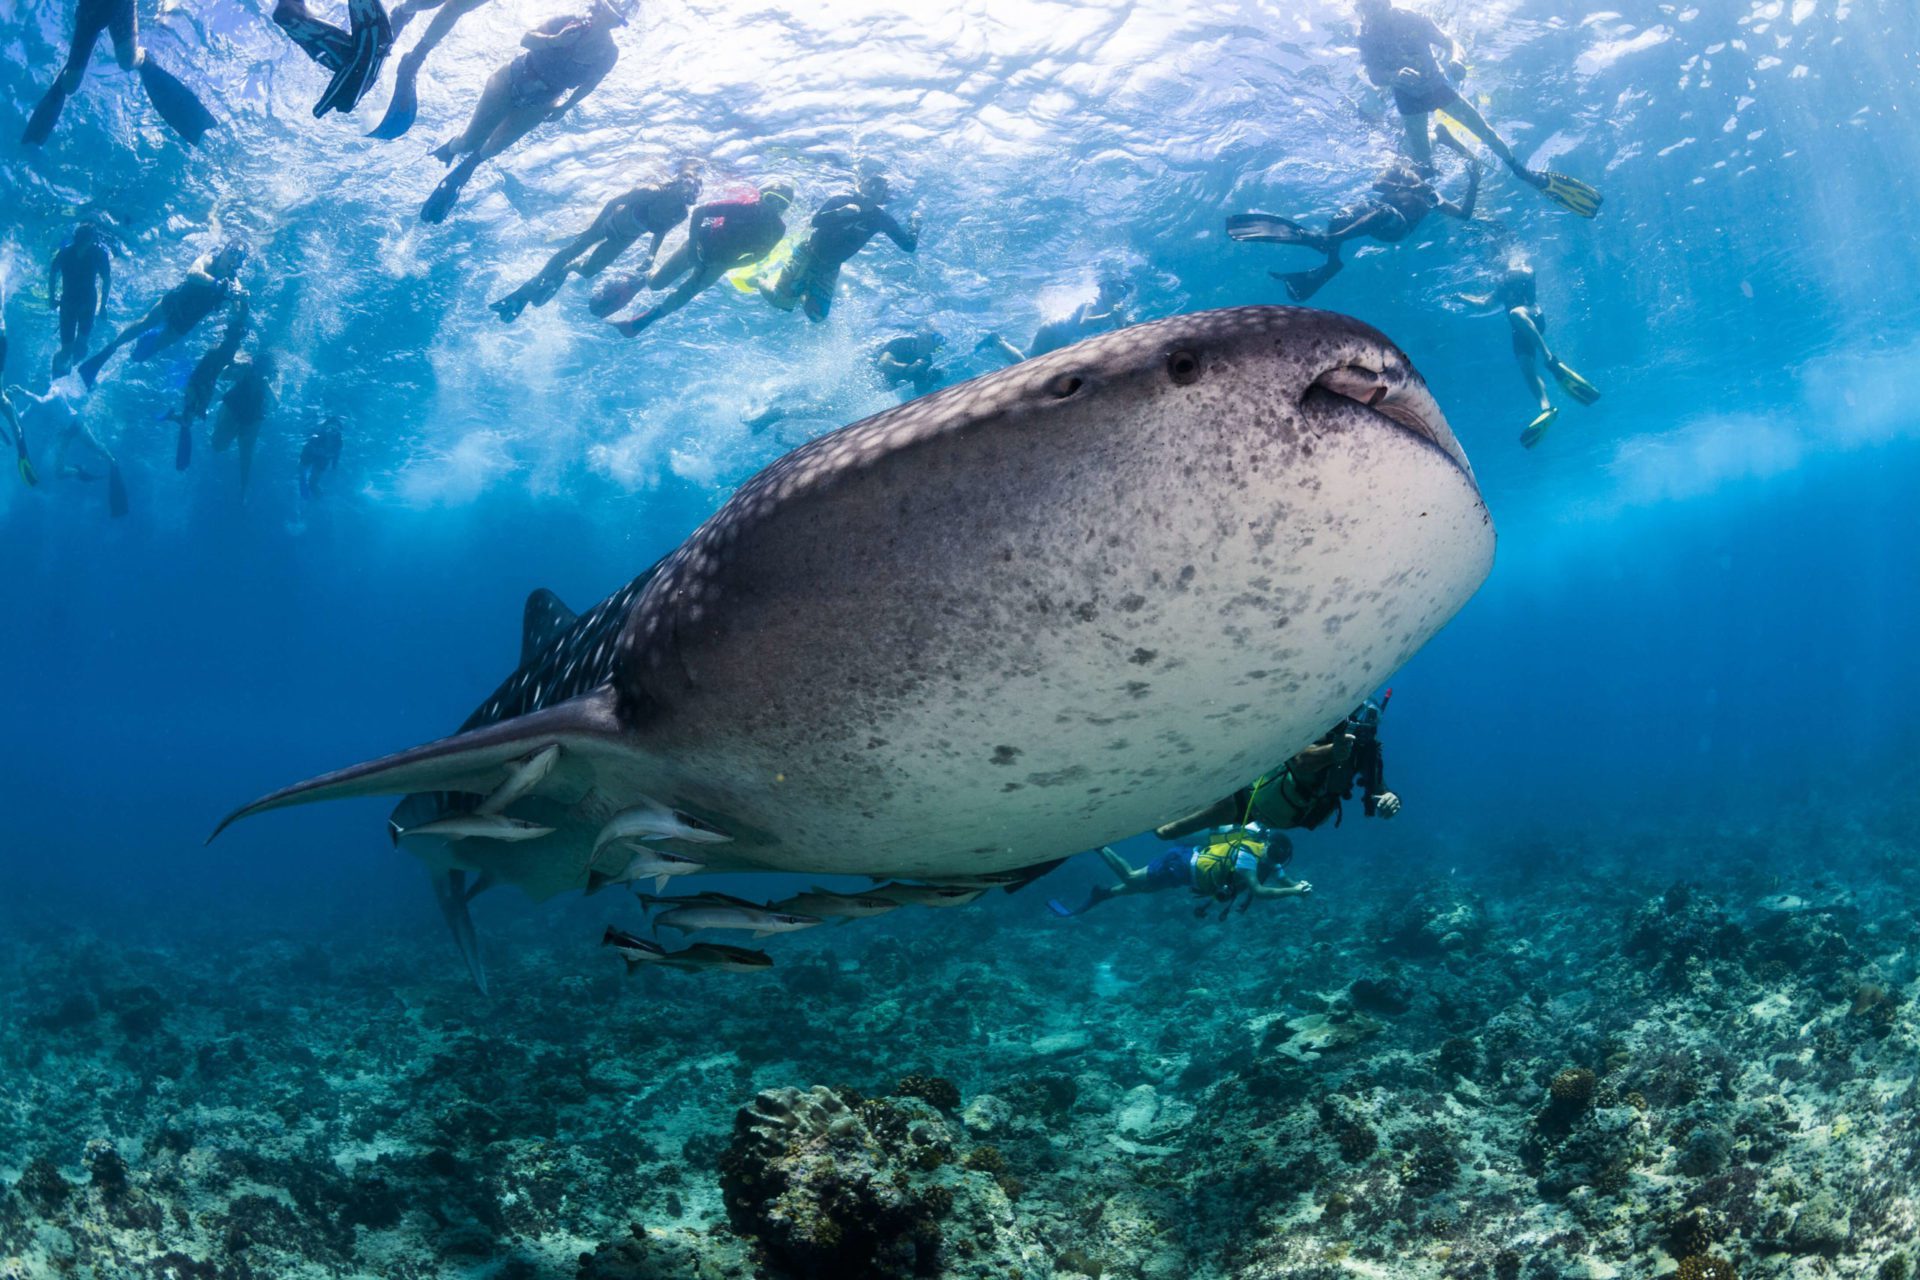 Scuba Diving The Indian Ocean